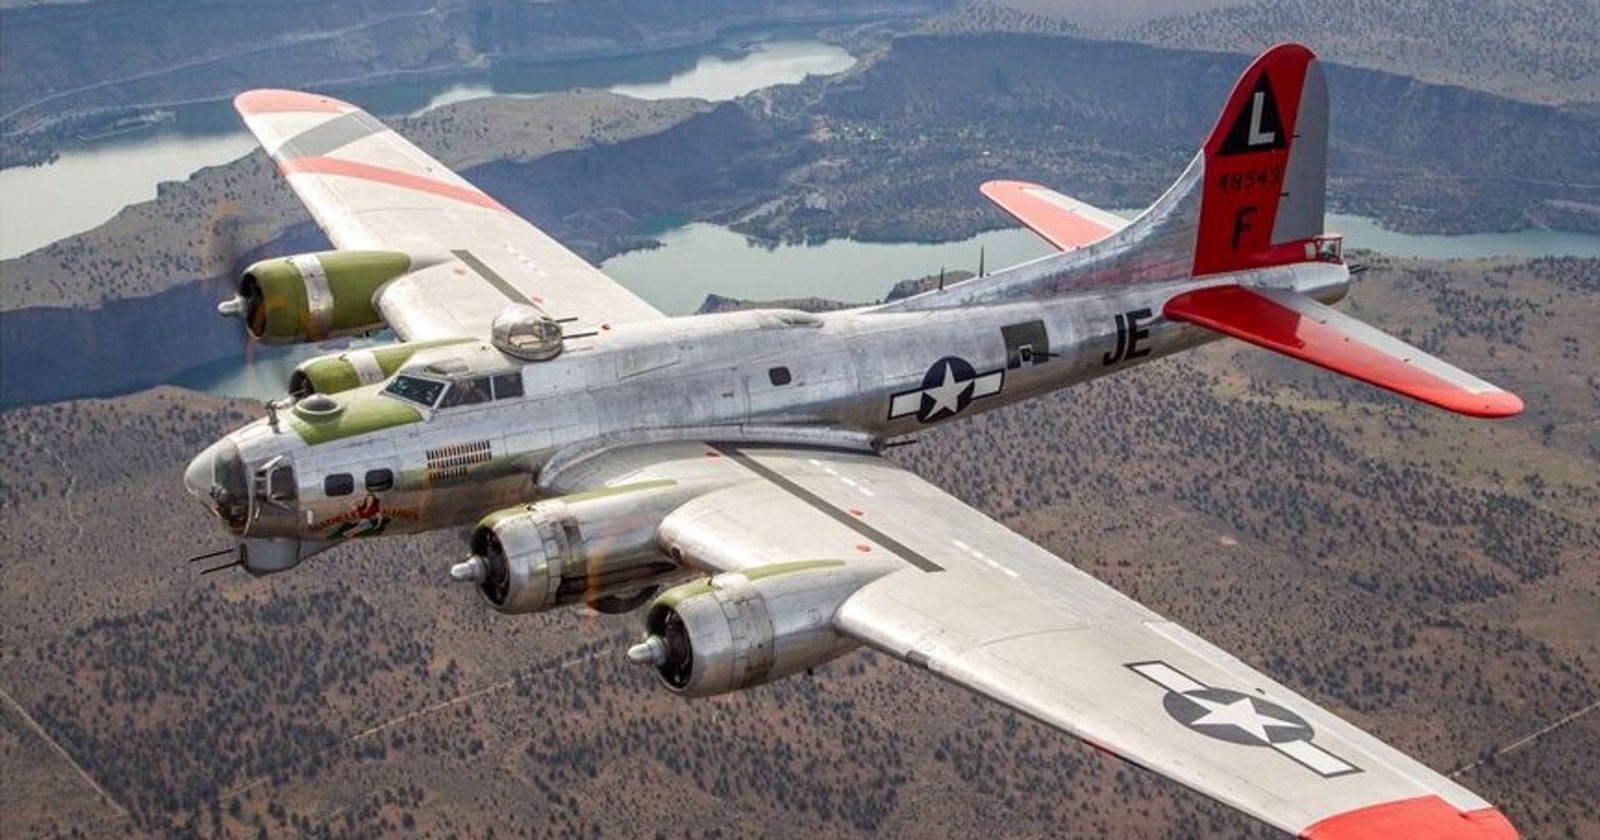 Amazing planes of World War II (Part 2)